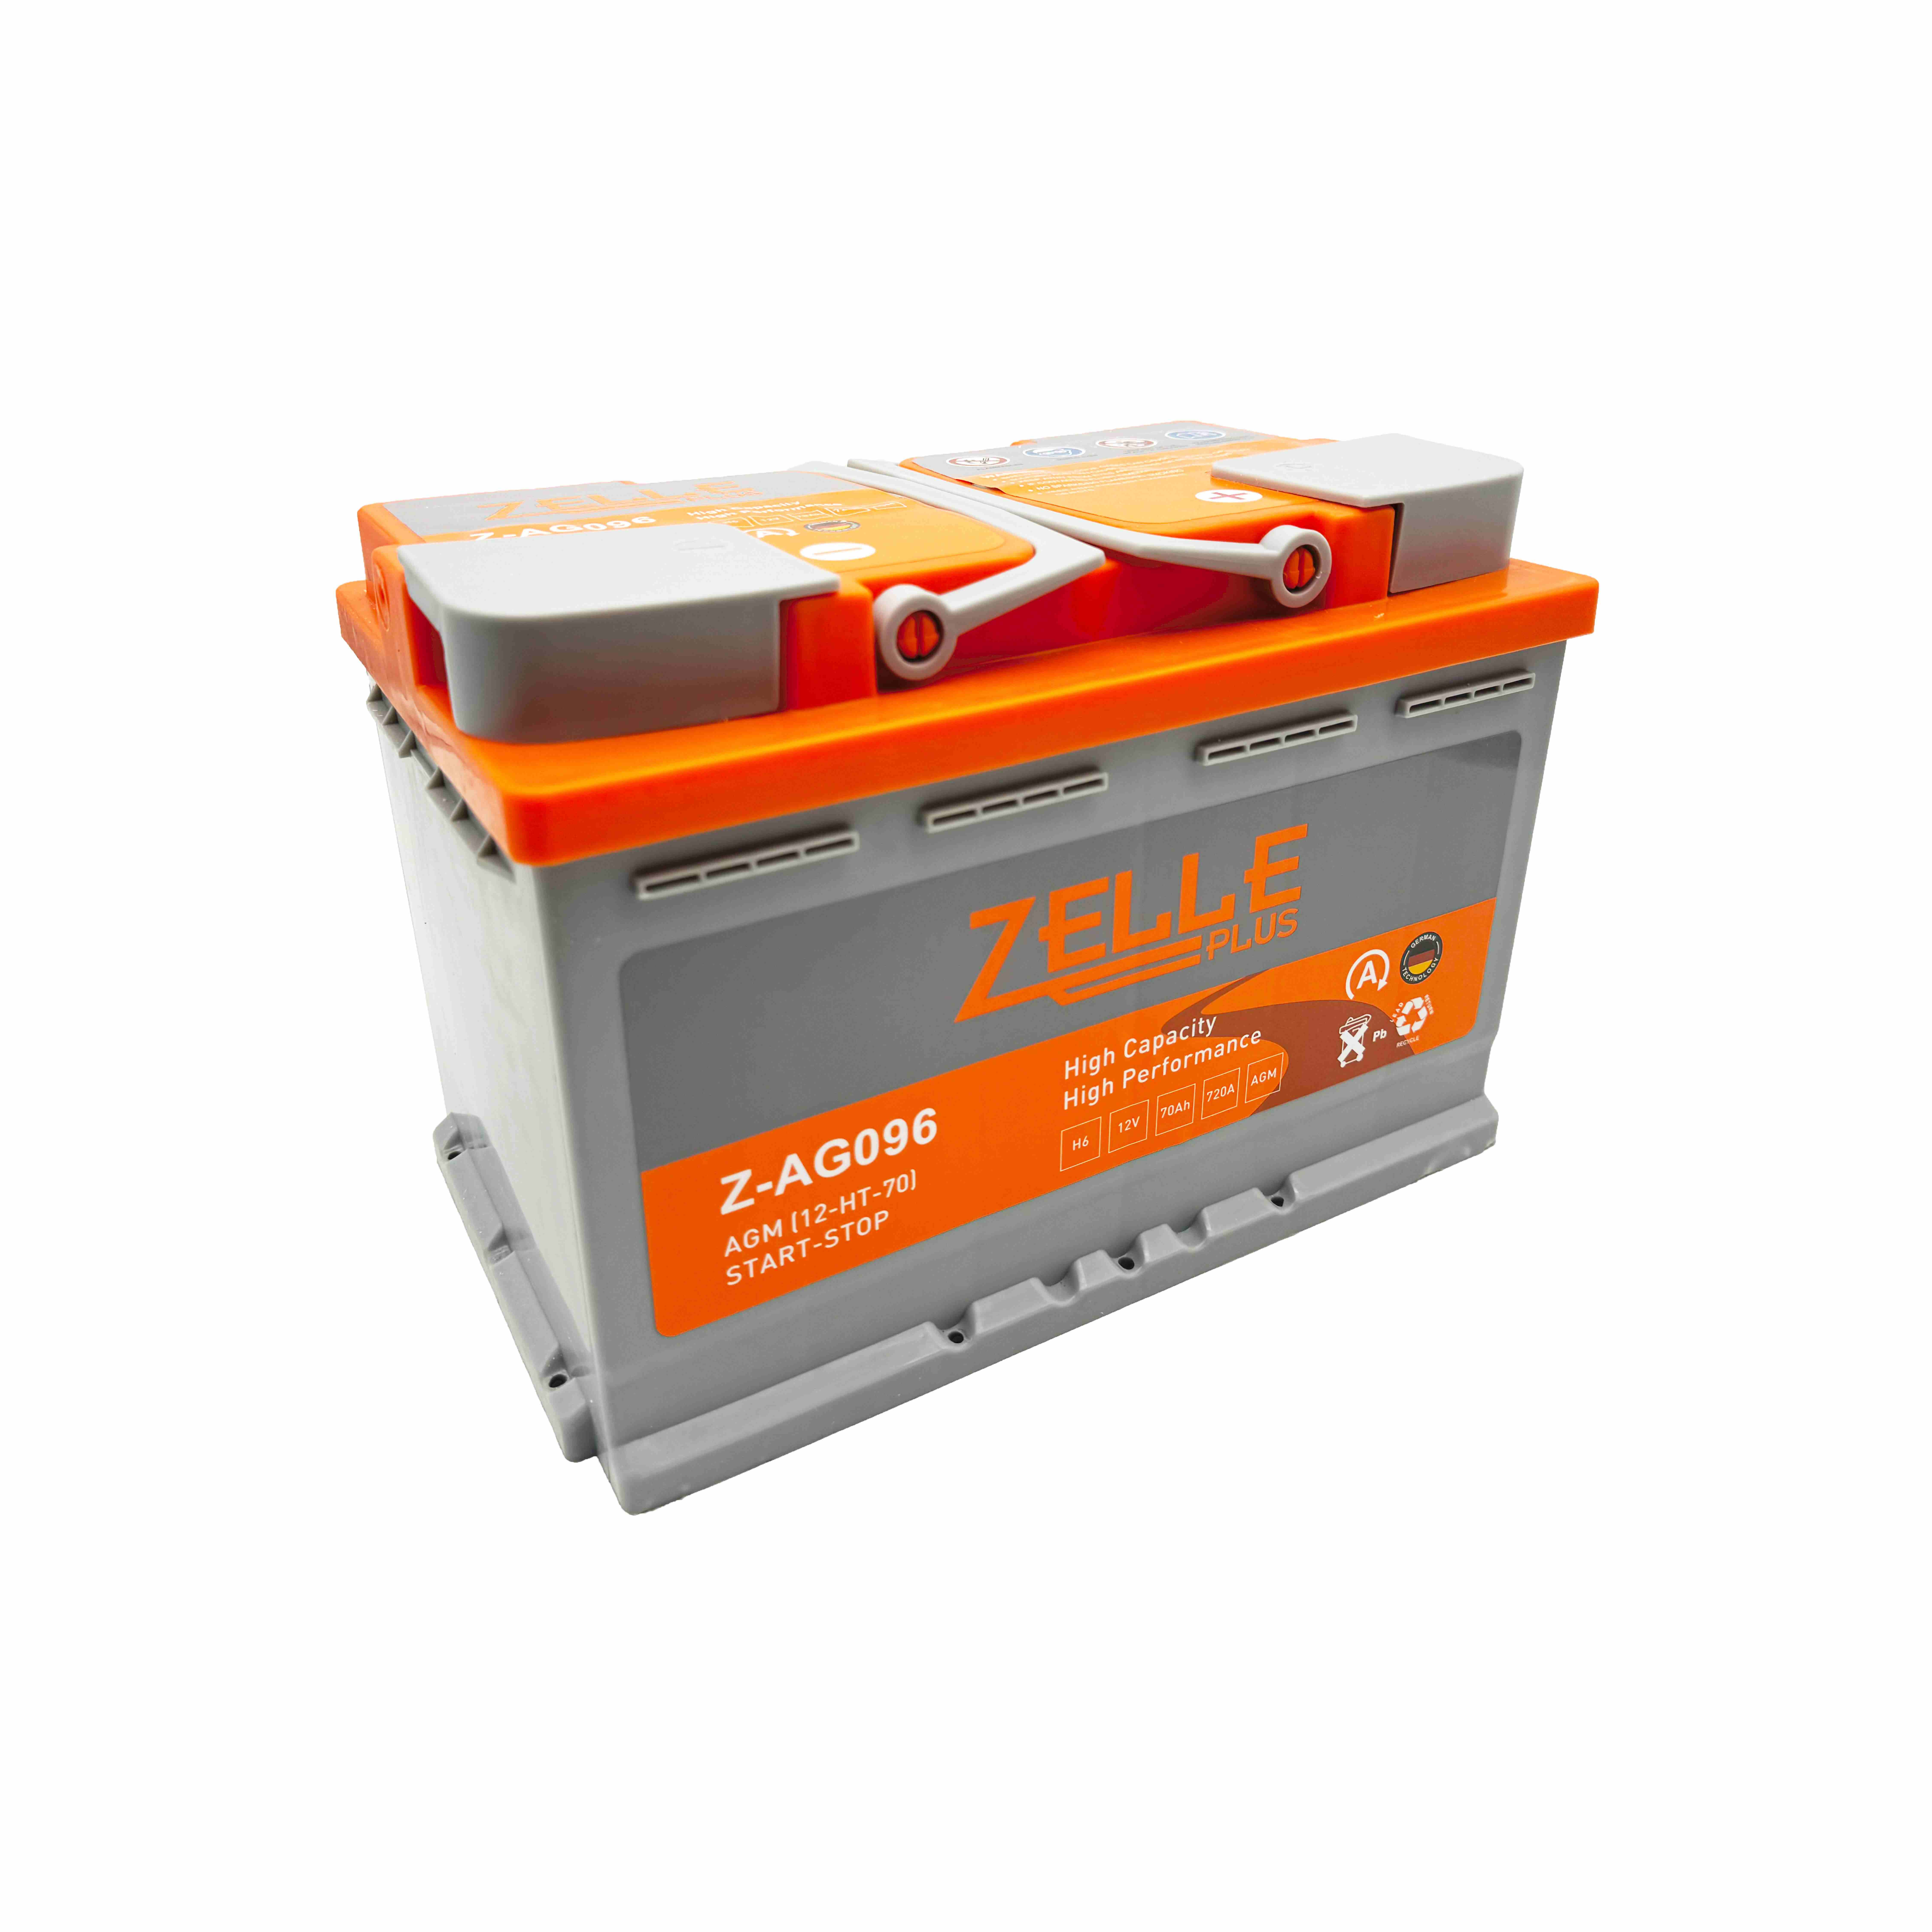 Zelle Plus AGM 096 Vehicle Battery (Z-AG096)